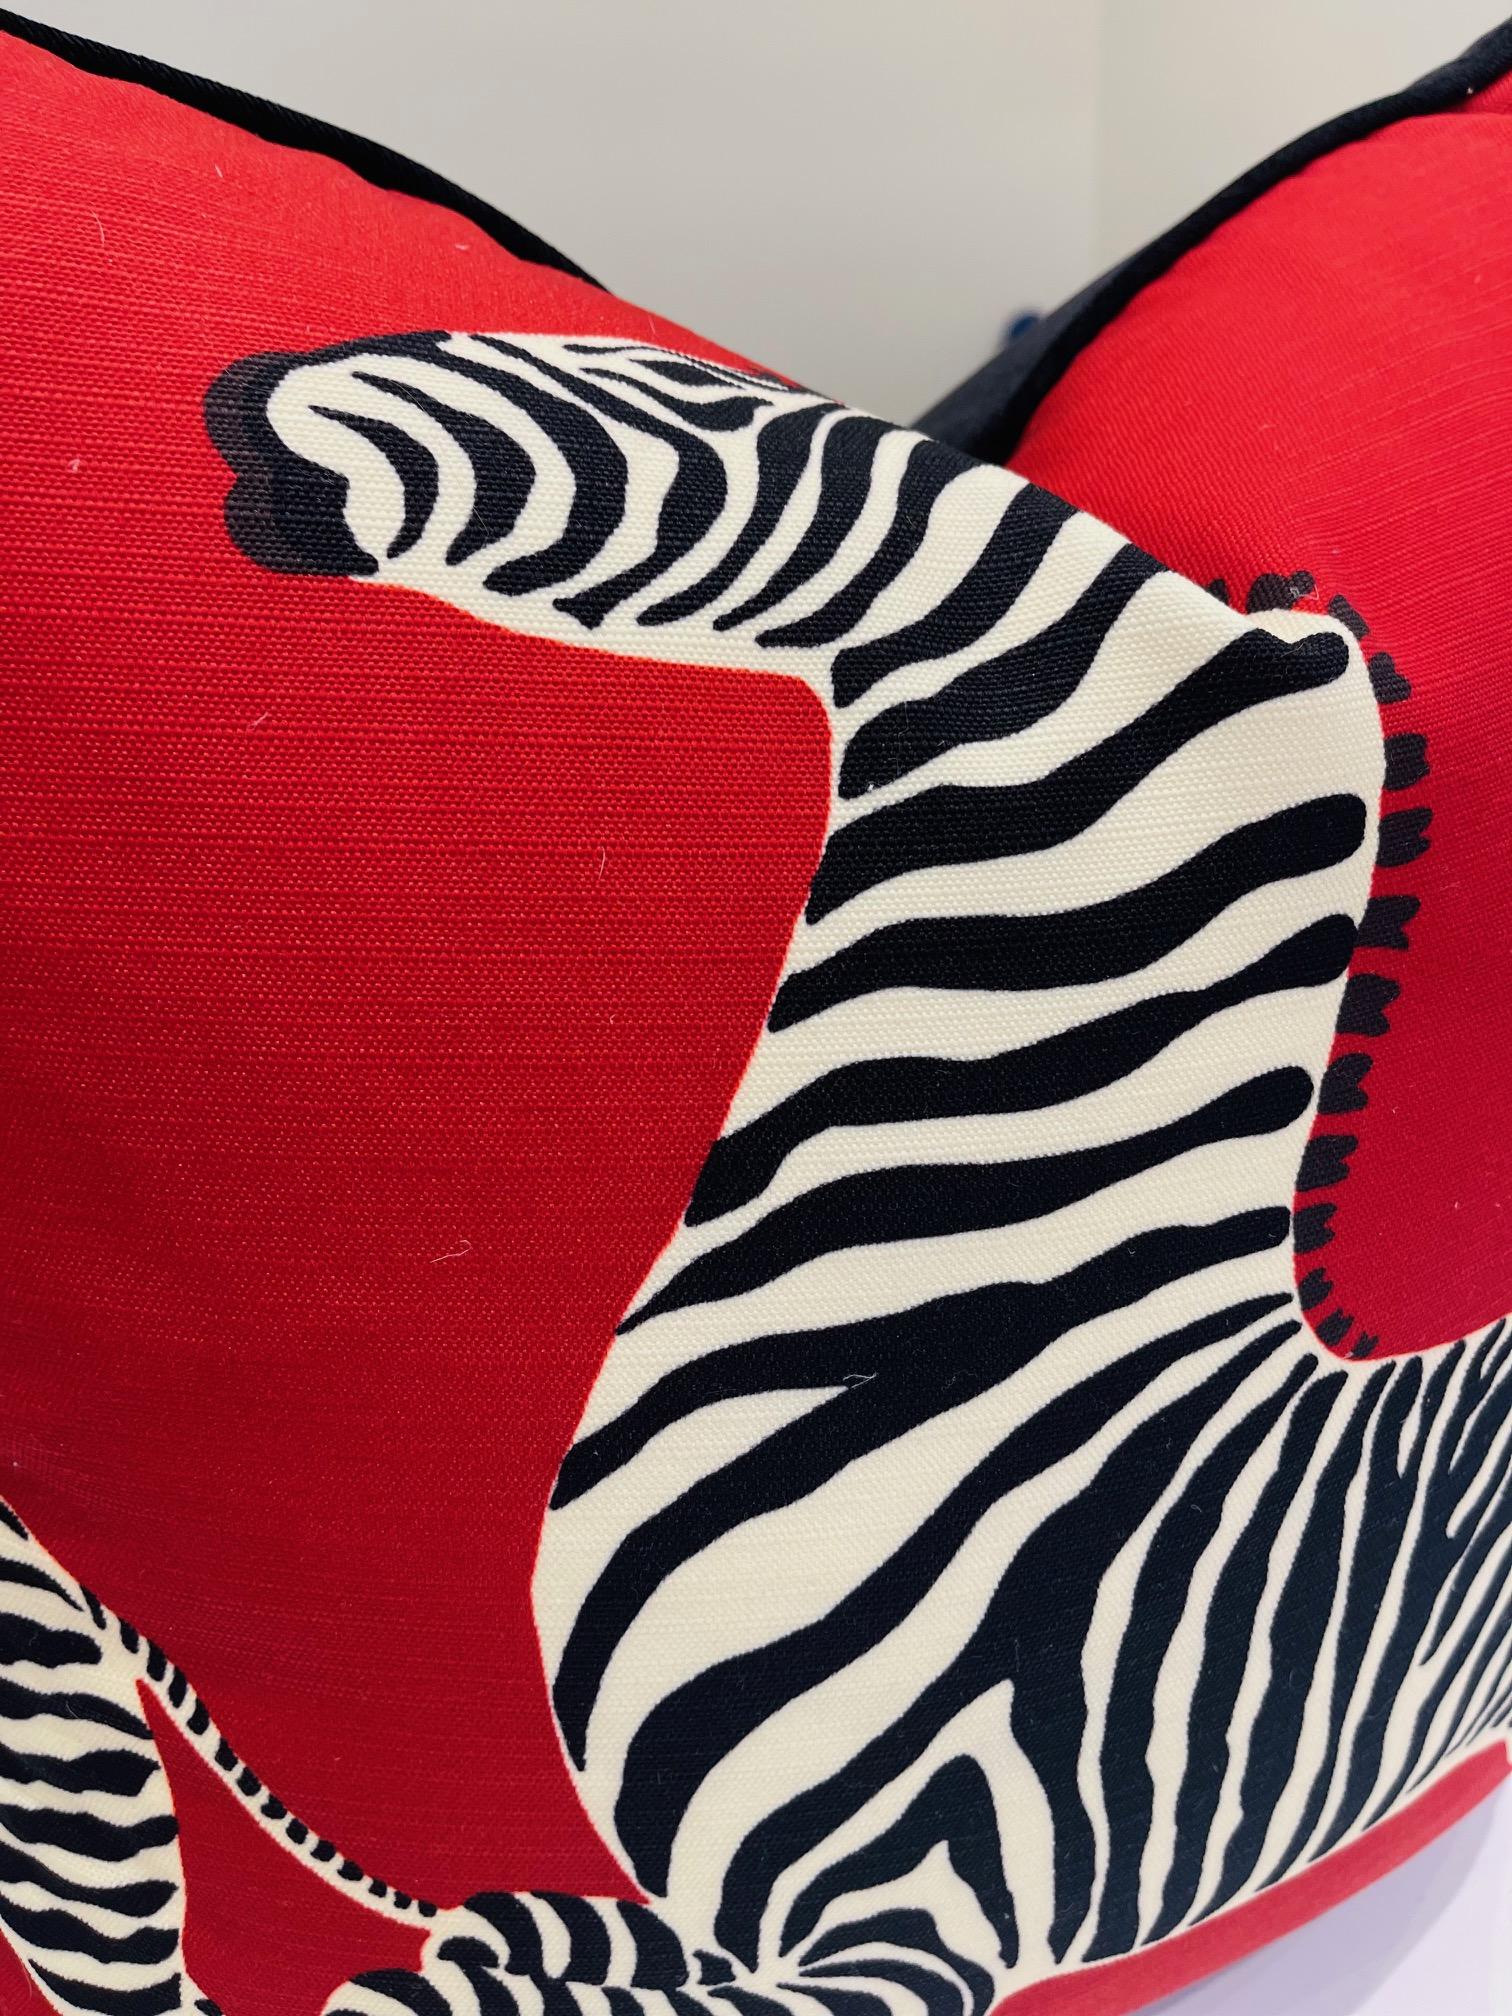 Contemporary House of Scalamandre Zebras Throw Pillow For Sale